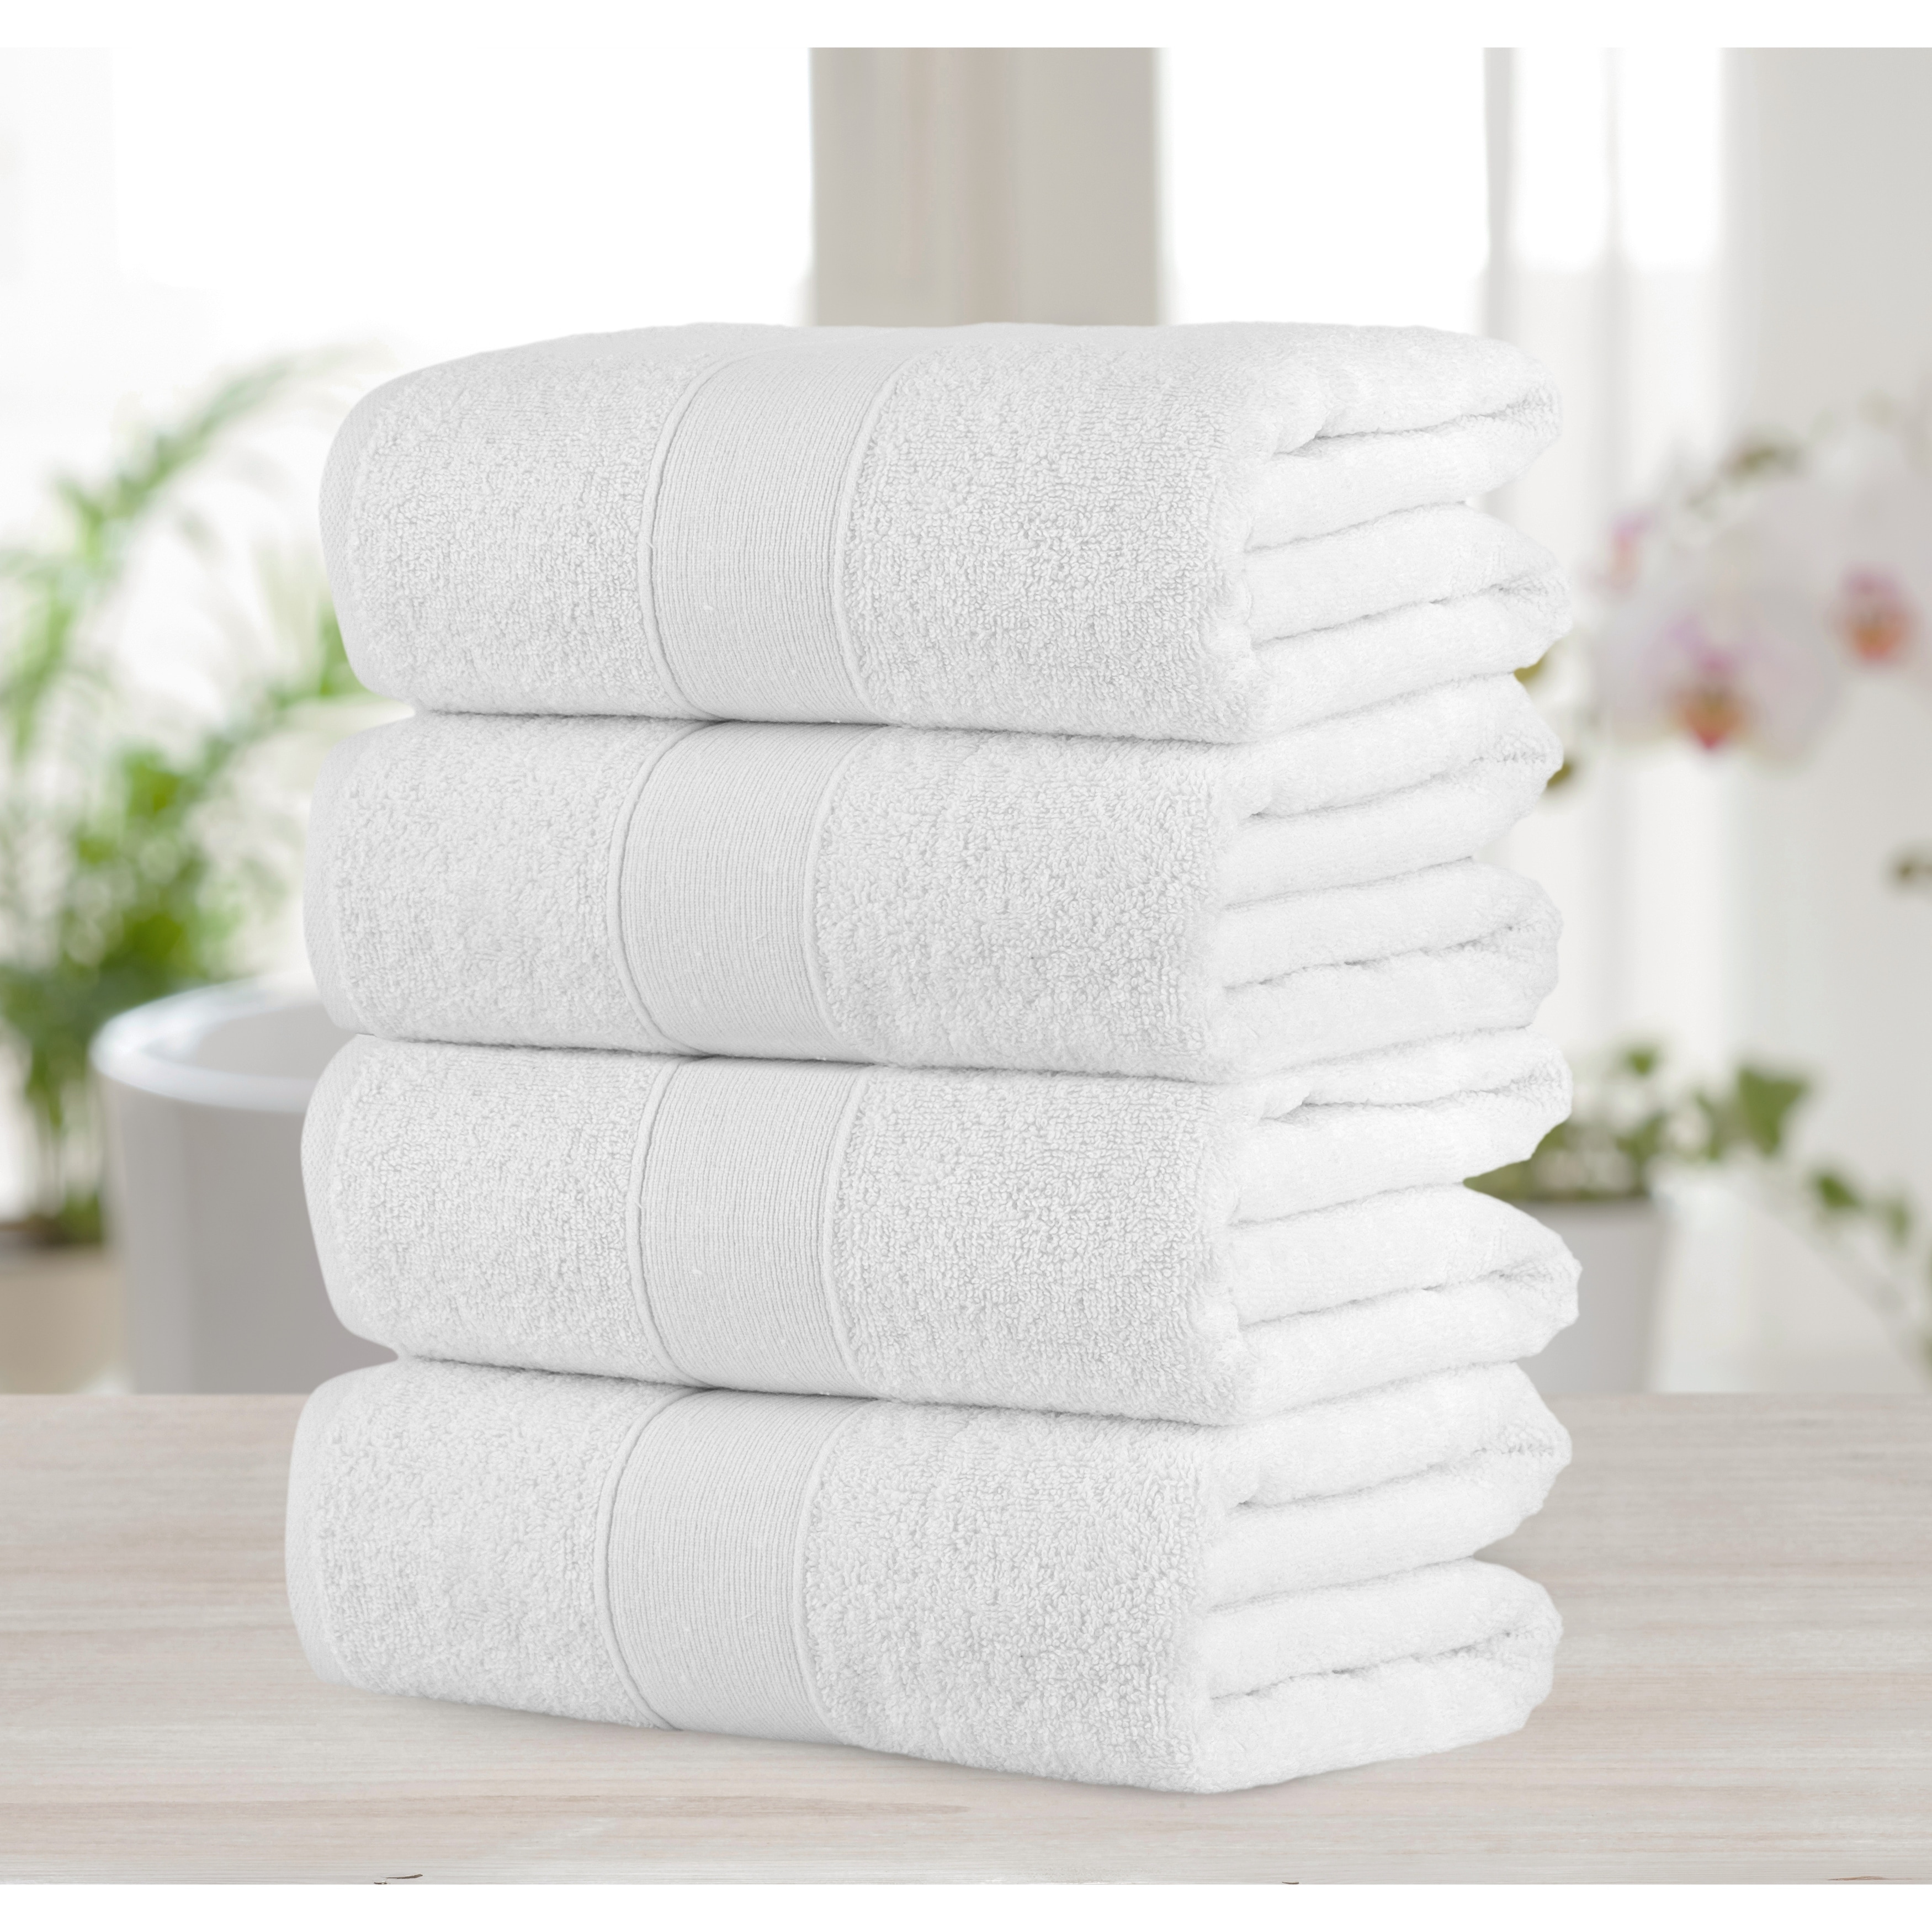 https://ak1.ostkcdn.com/images/products/is/images/direct/edbcc26d6b5a66183f5b2ad2ad2fe12c70dc427c/Chic-Home-4-Piece-Standard-100-Oeko-Tex-Certified-Bath-Towel-Set.jpg